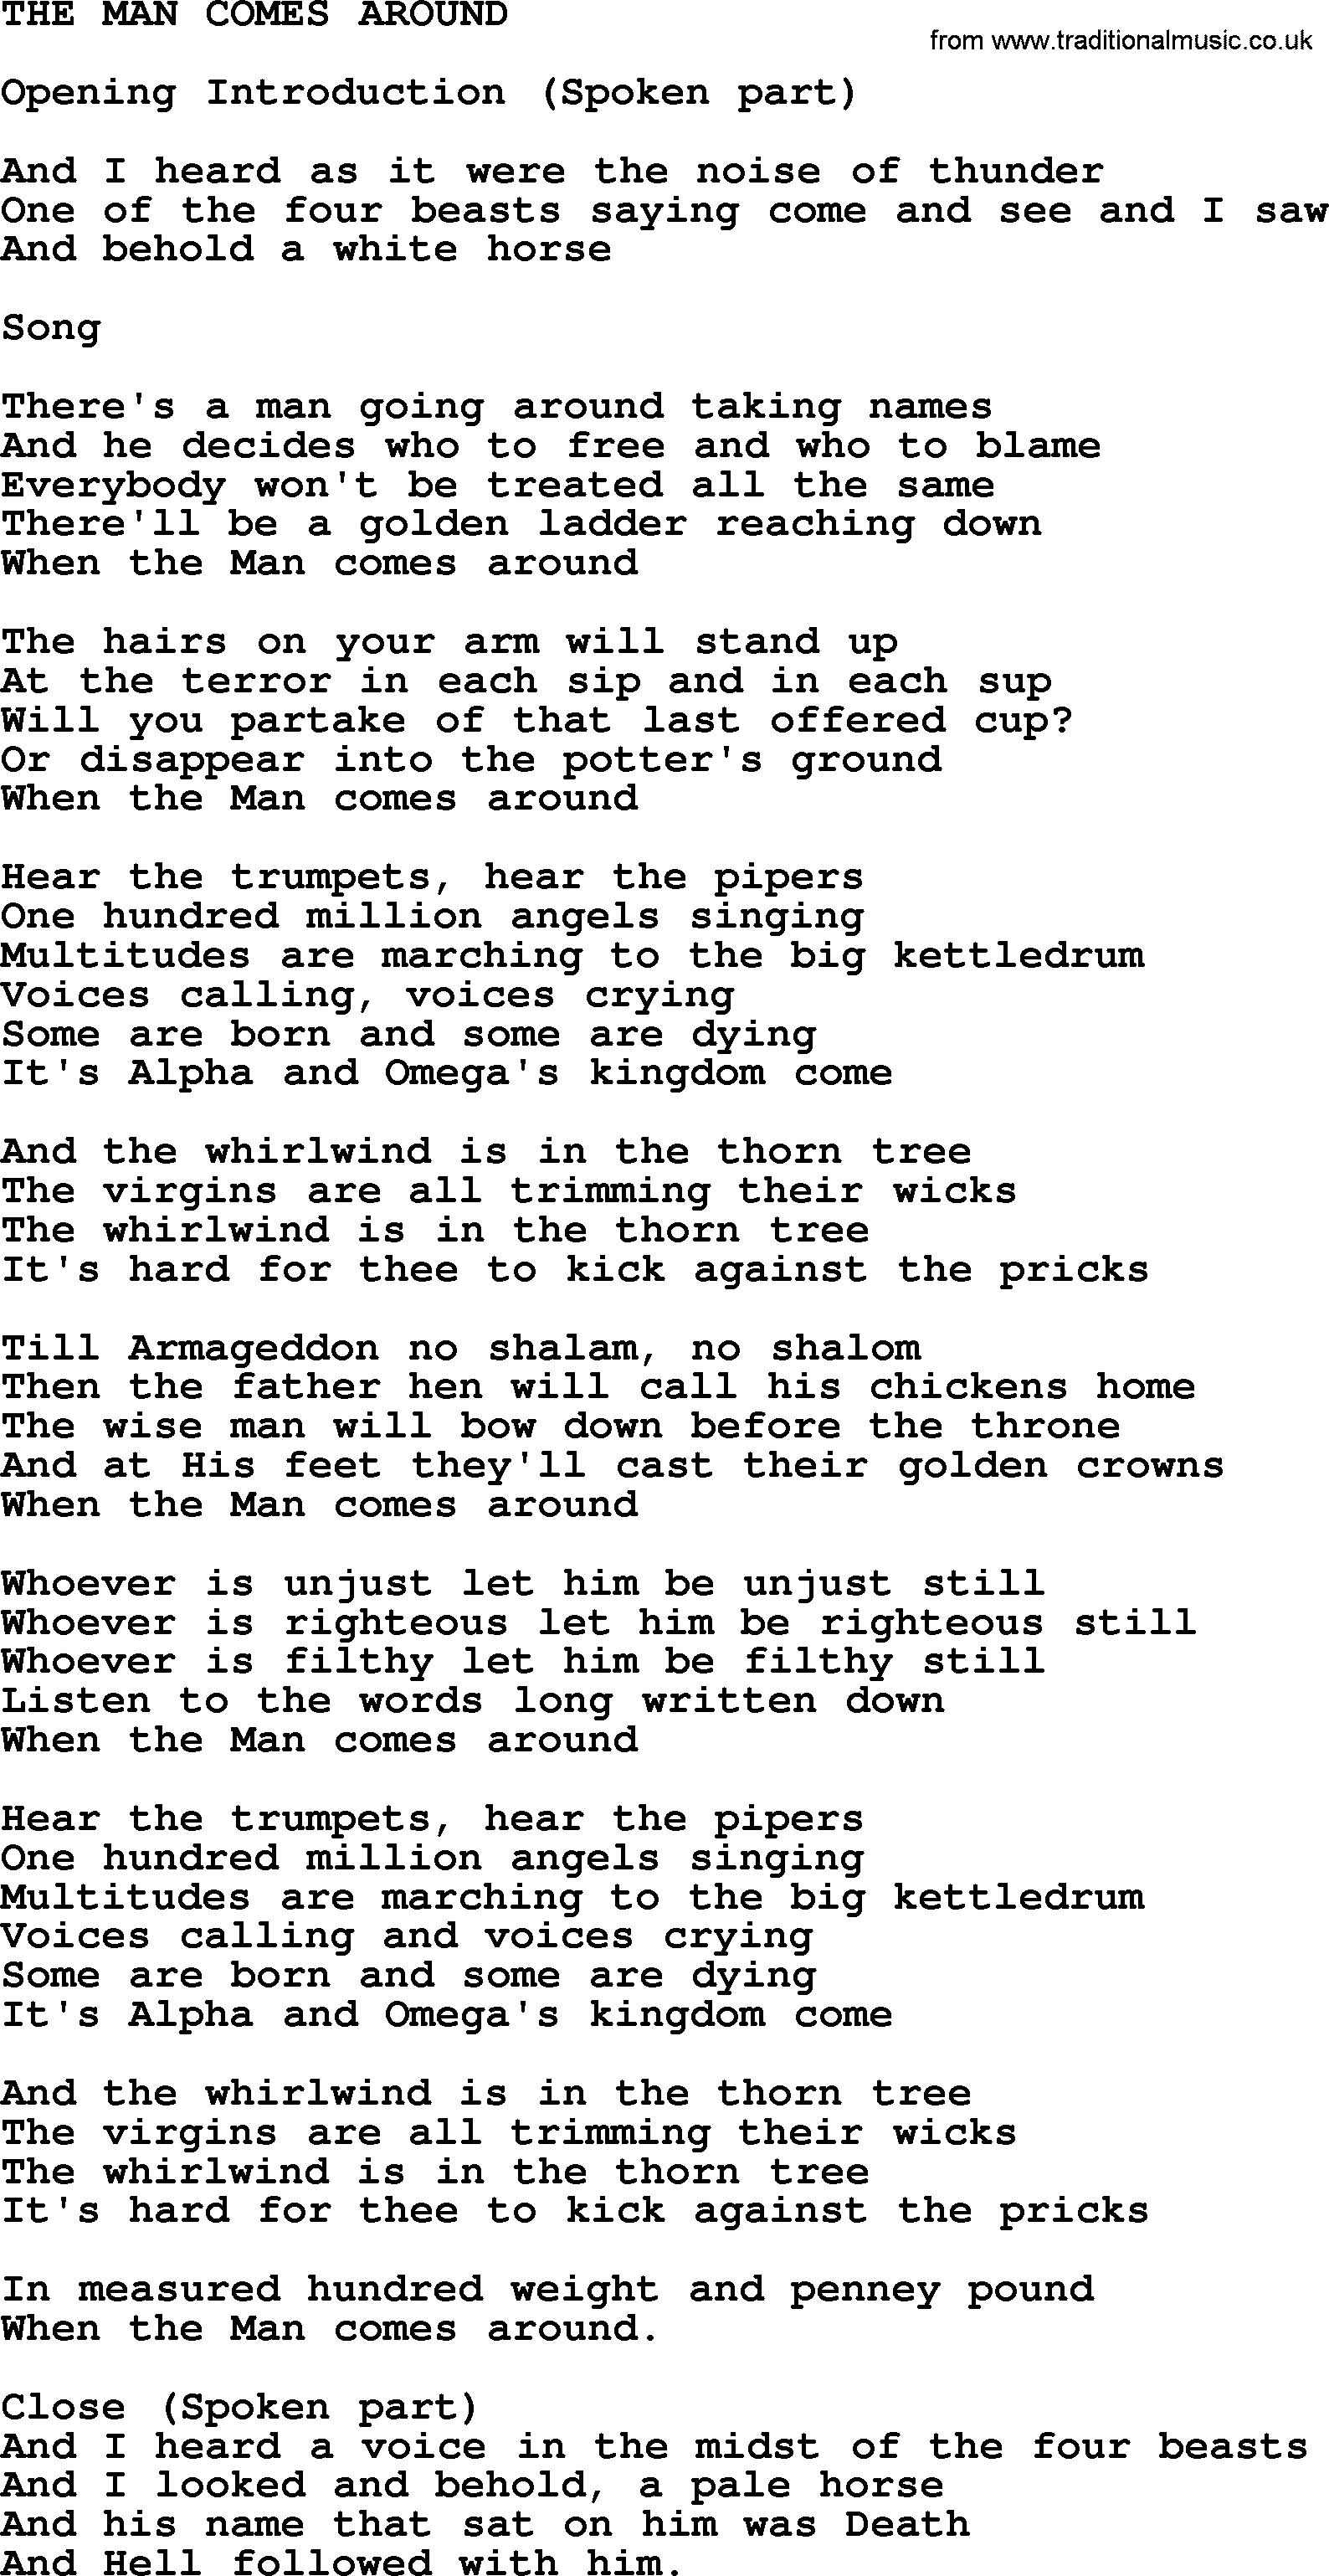 Johnny Cash song The Man Comes Around.txt lyrics